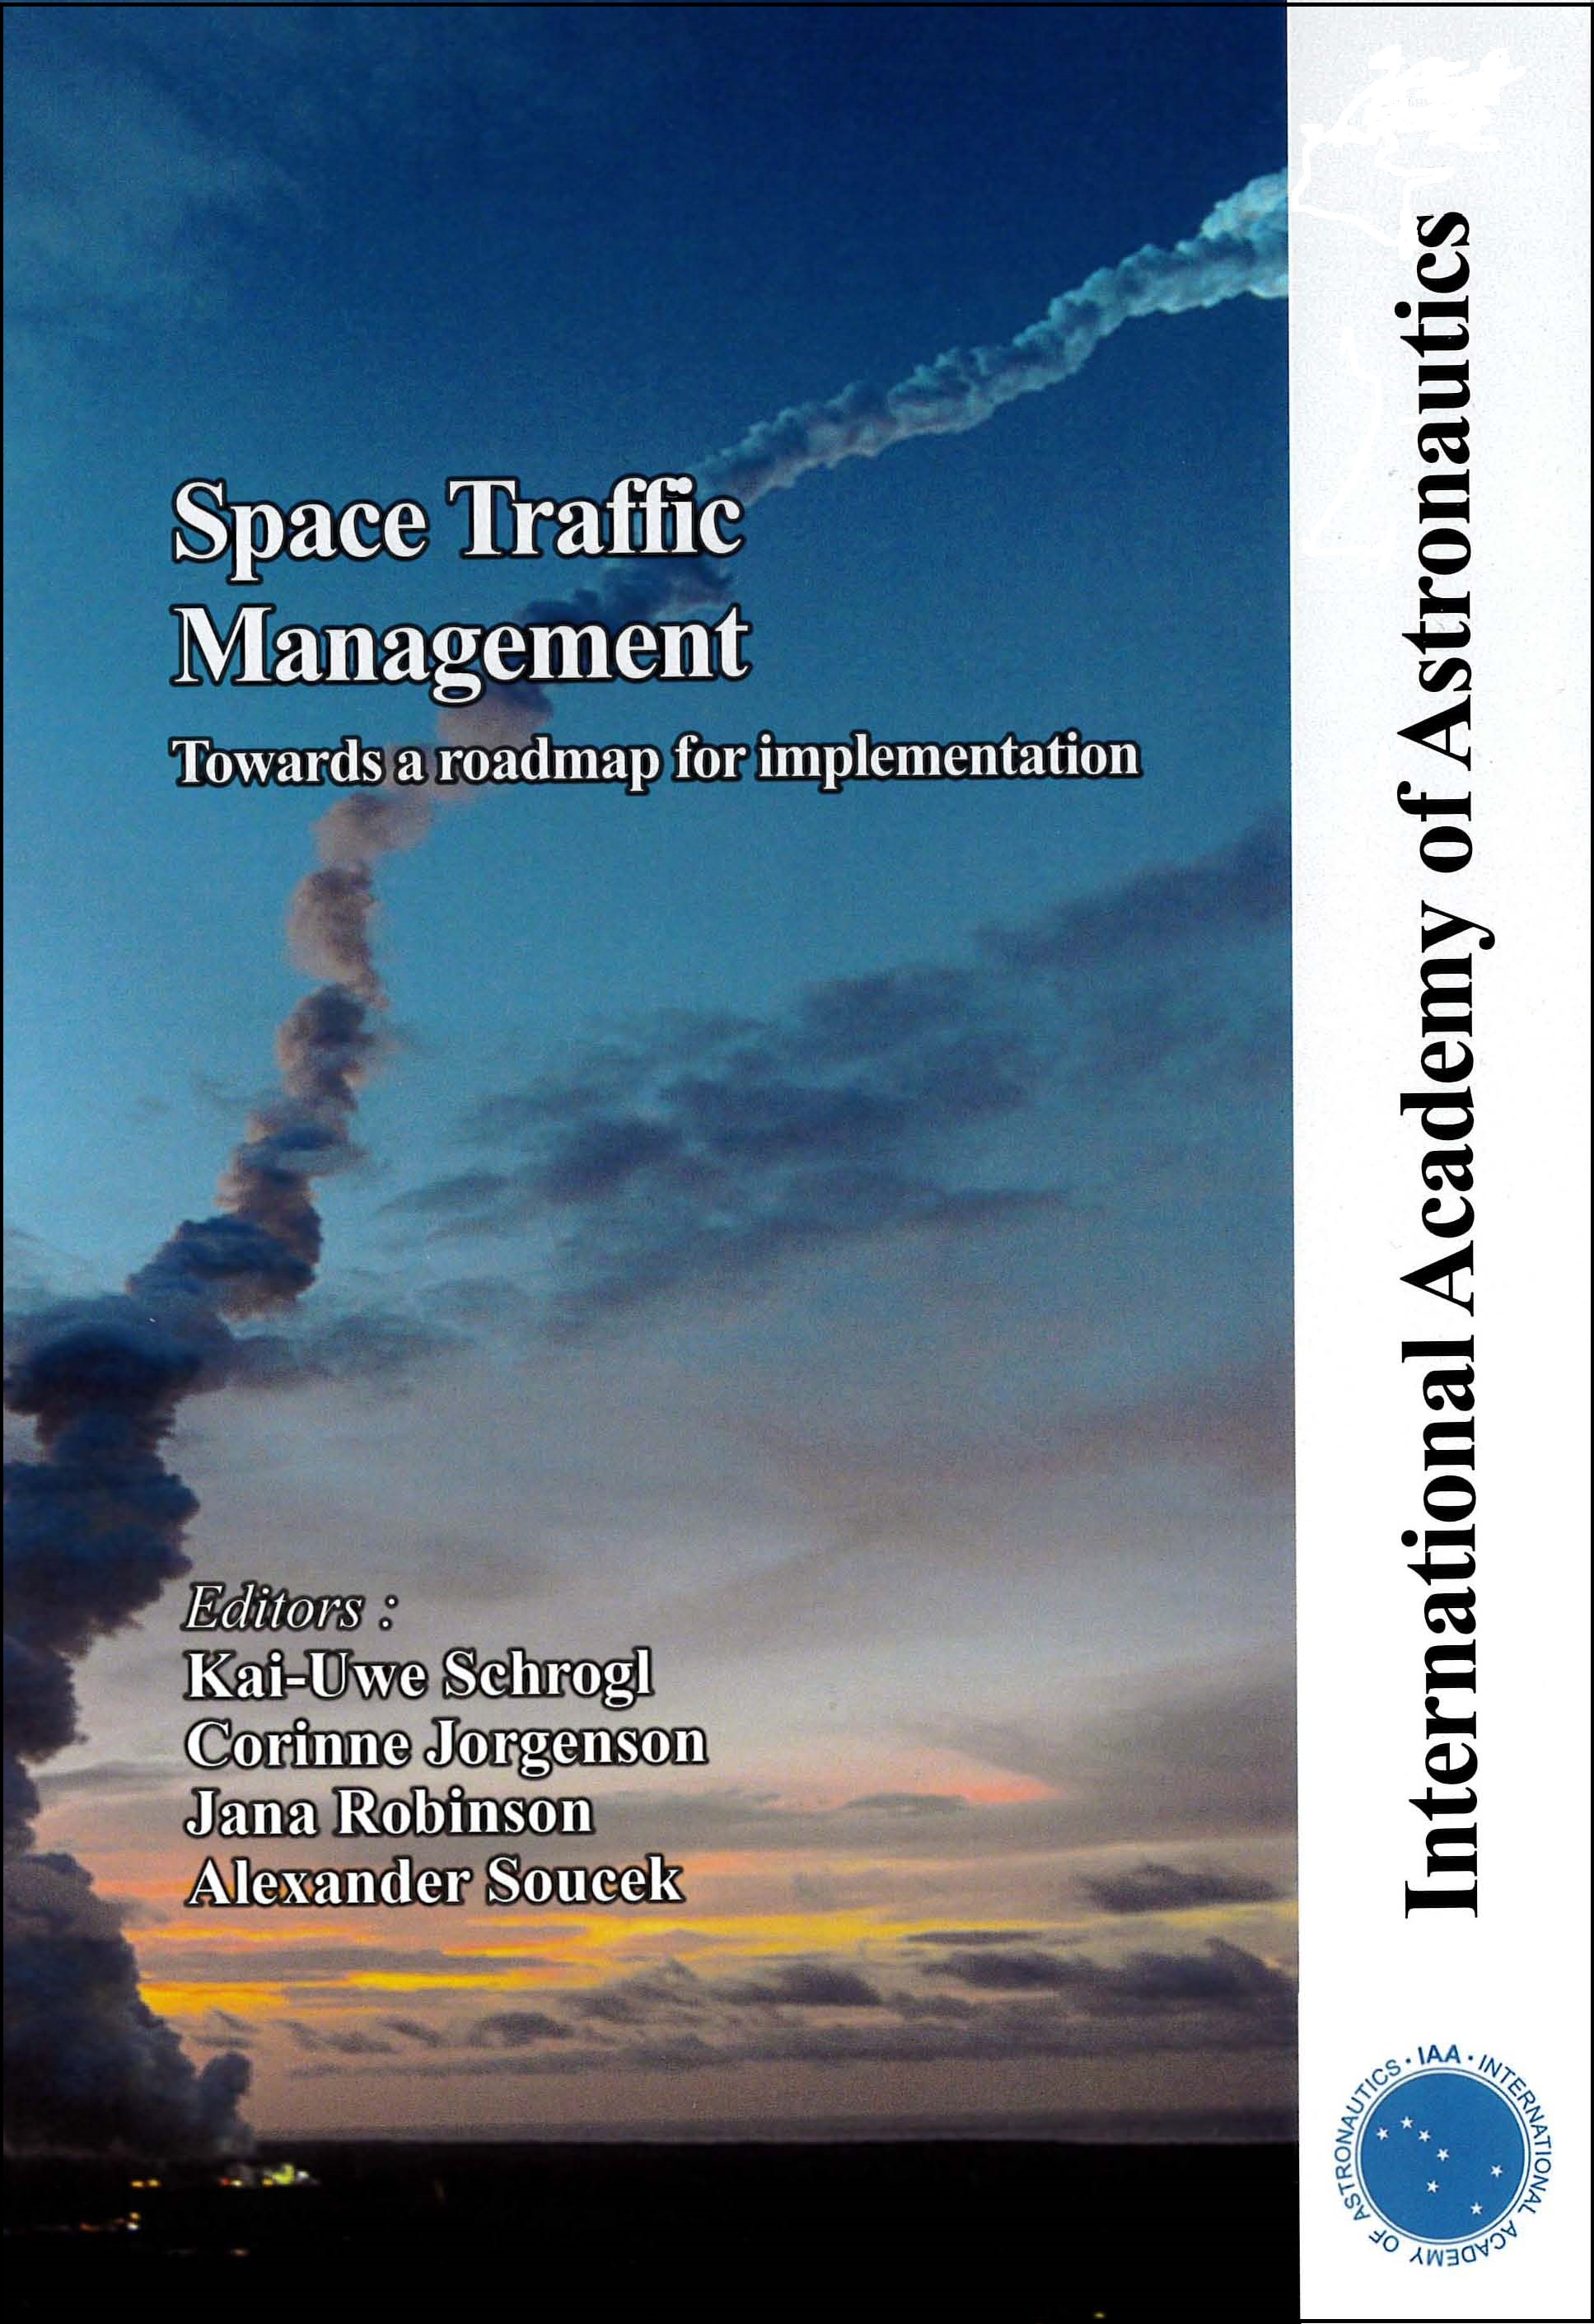 IAA Cosmic Study on Space Traffic Management